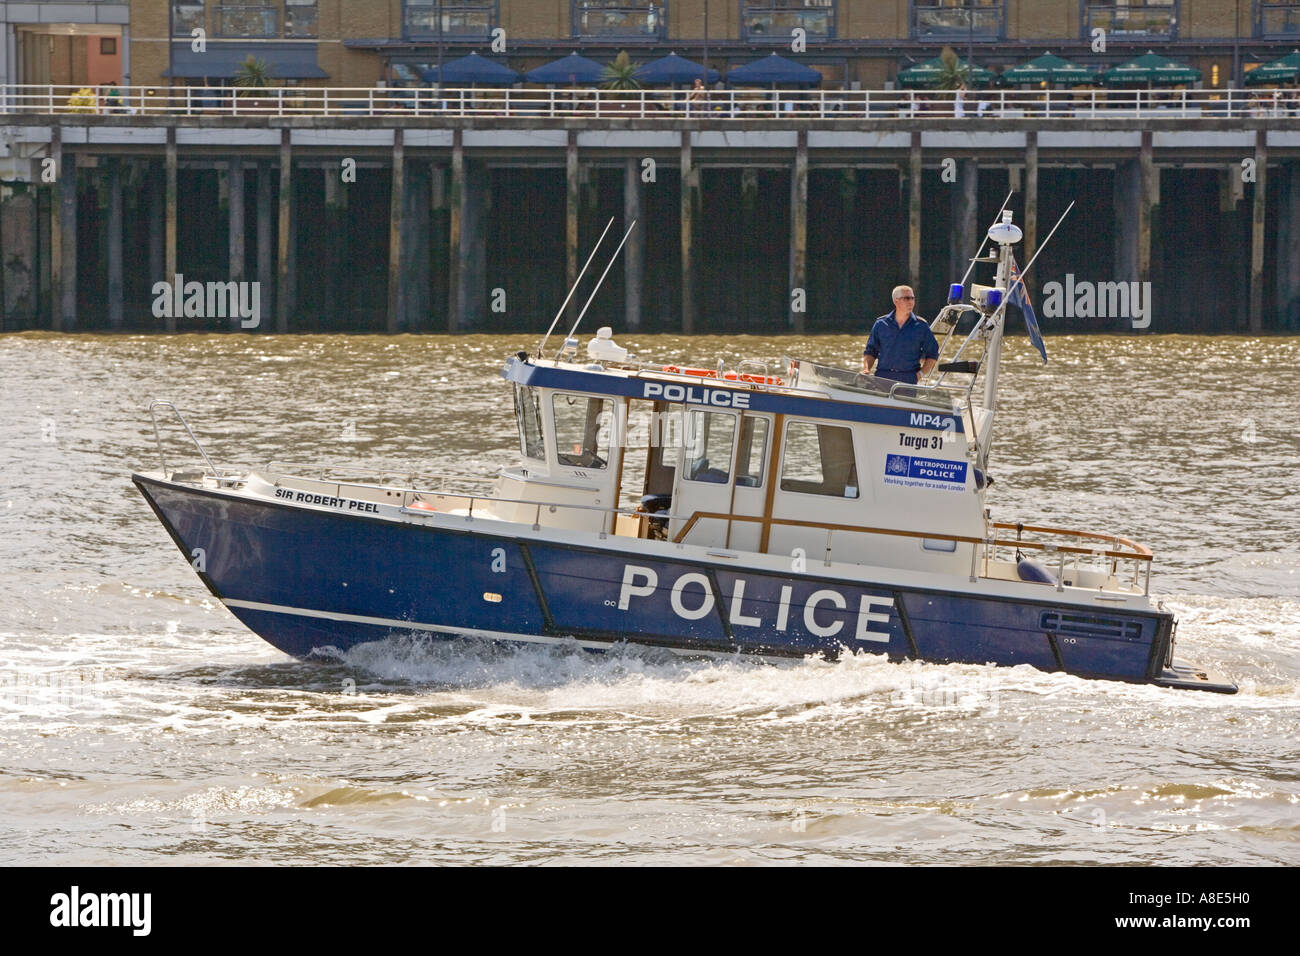 Police Patrol Boat 'Sir Robert Peel' on the Thames Stock Photo